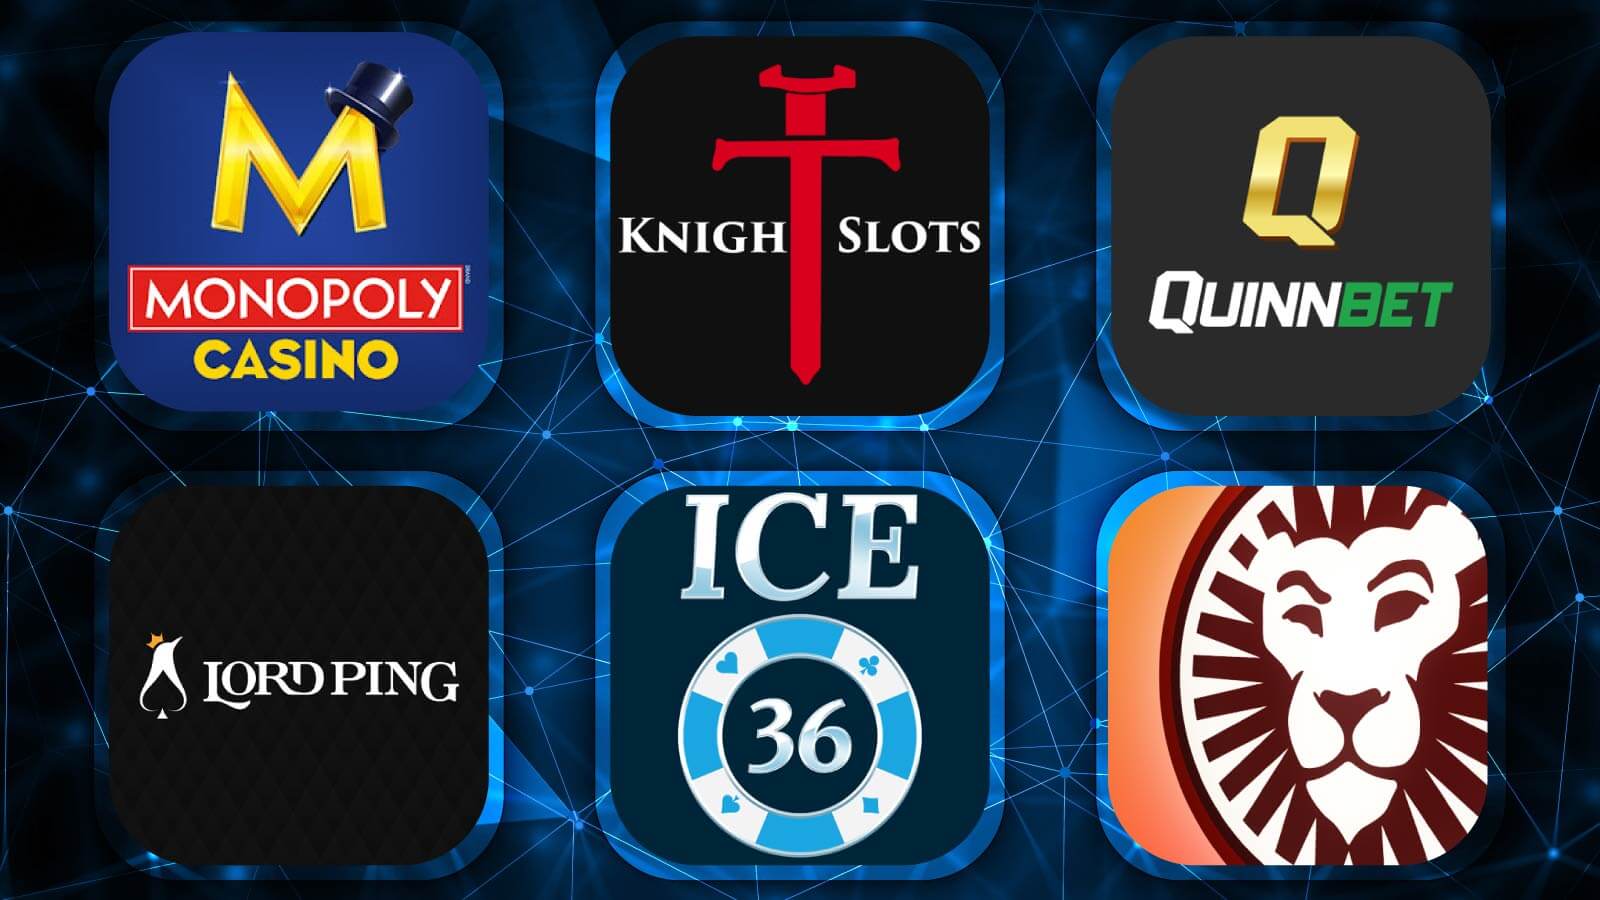 Sneak-Peek Into the Best Online Real Money Gambling Apps